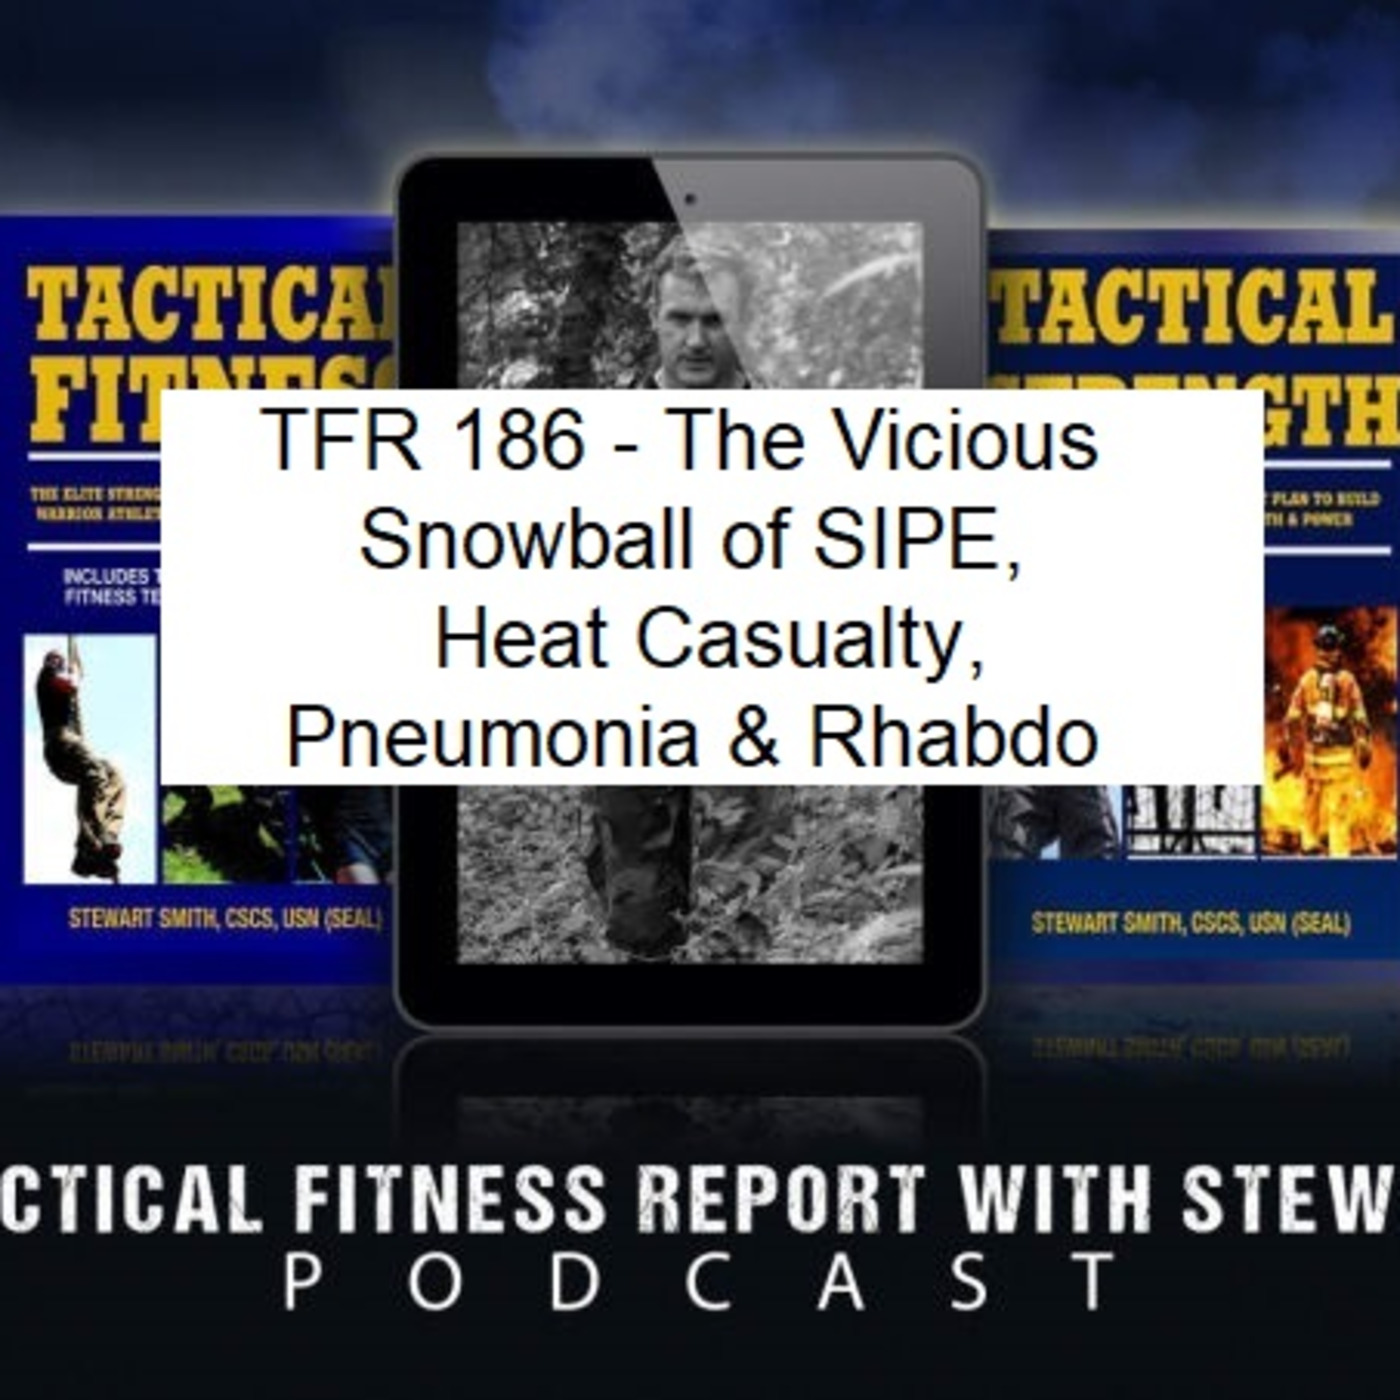 TFR186 - A Vicious Snowball of SIPE, Heat Casualty, Pneumonia & Rhabdo